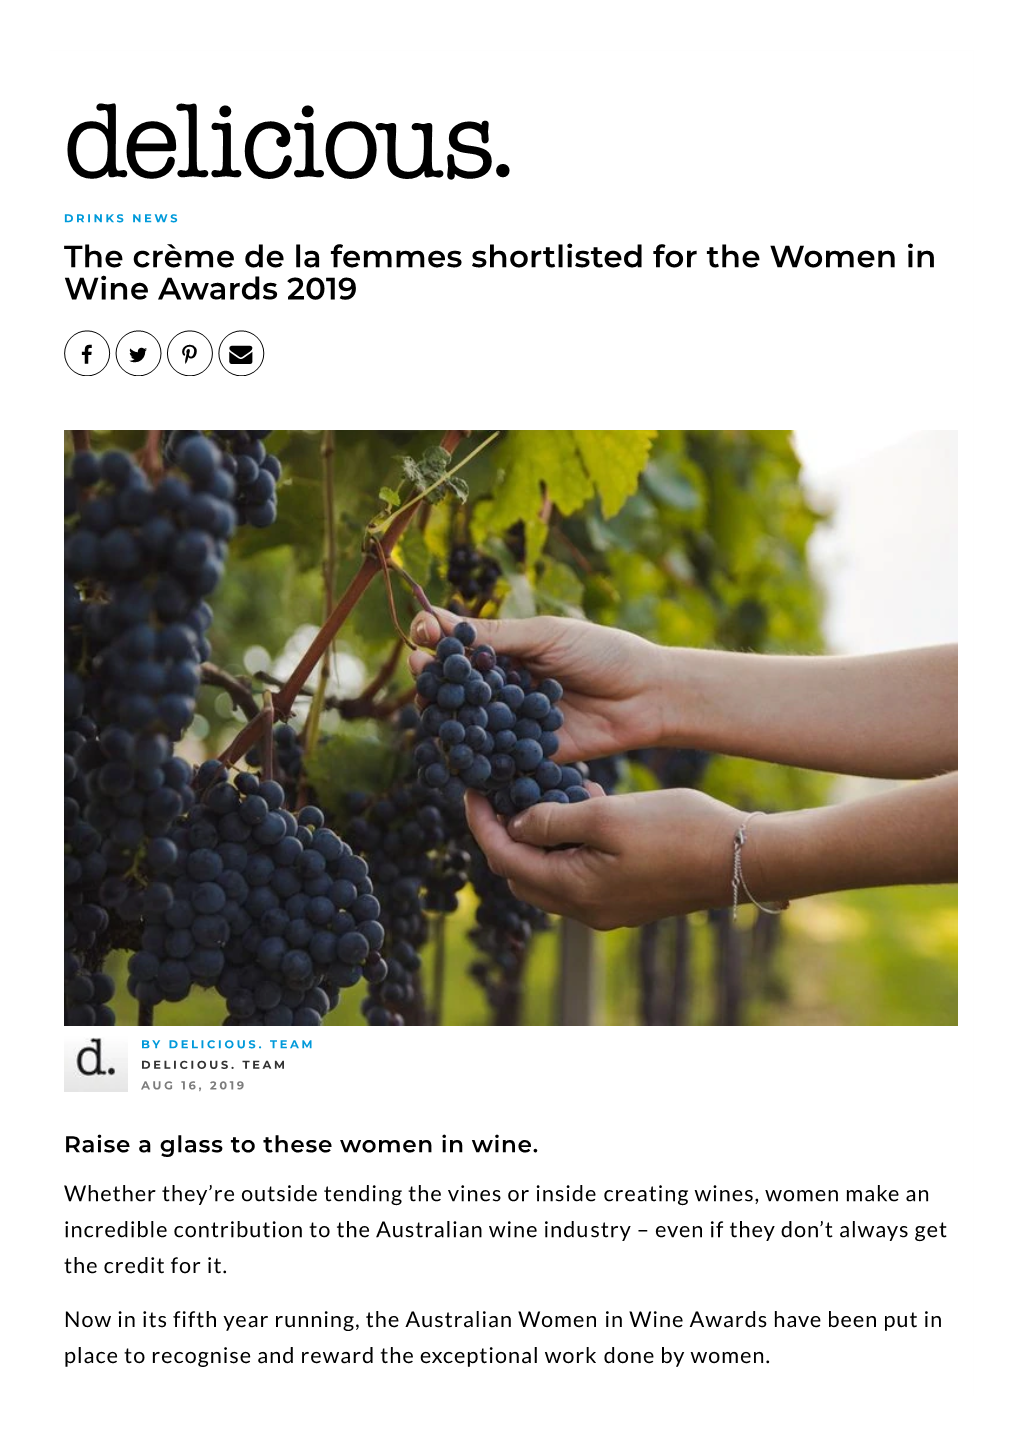 The Crème De La Femmes Shortlisted for the Women in Wine Awards 2019